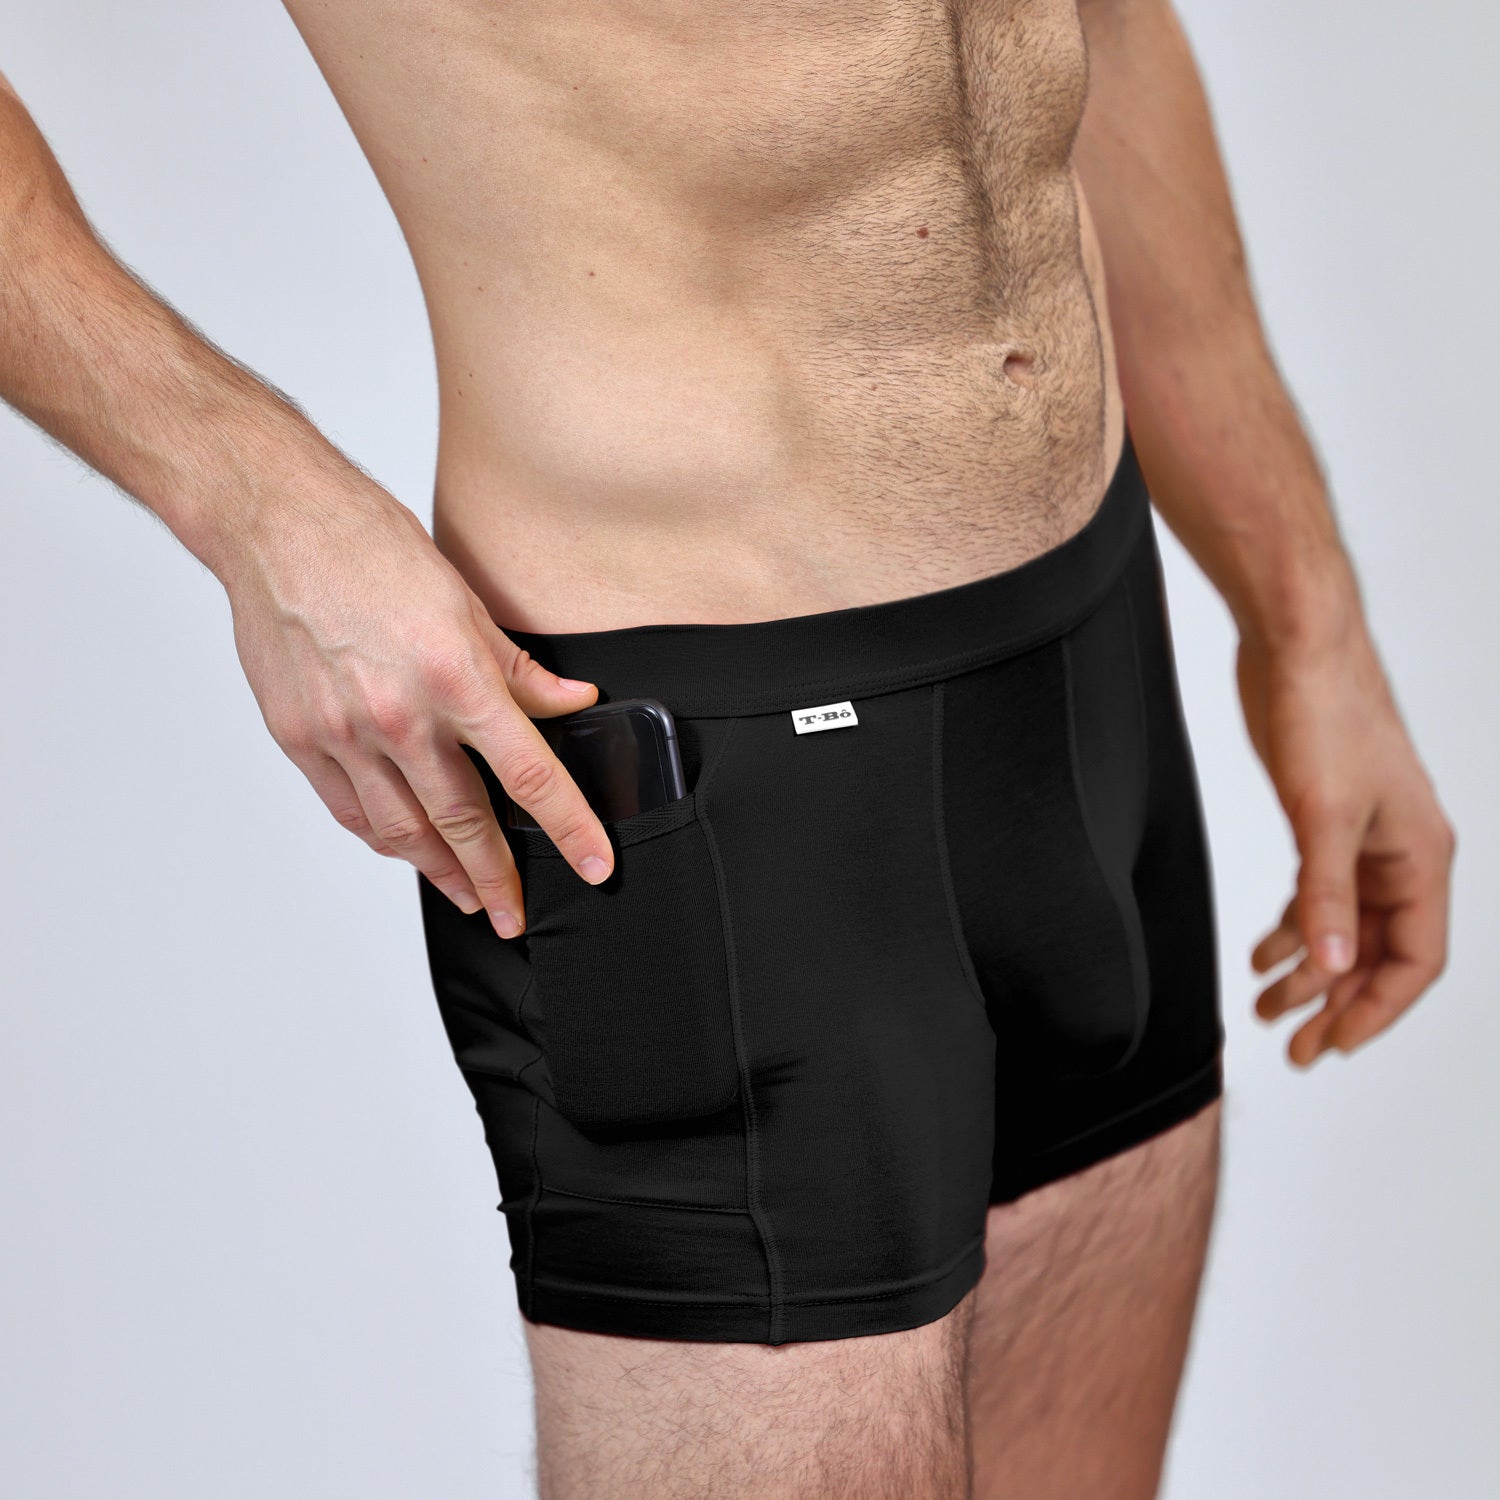 Underwear with Pockets: The Ultimate Utility Underwear?